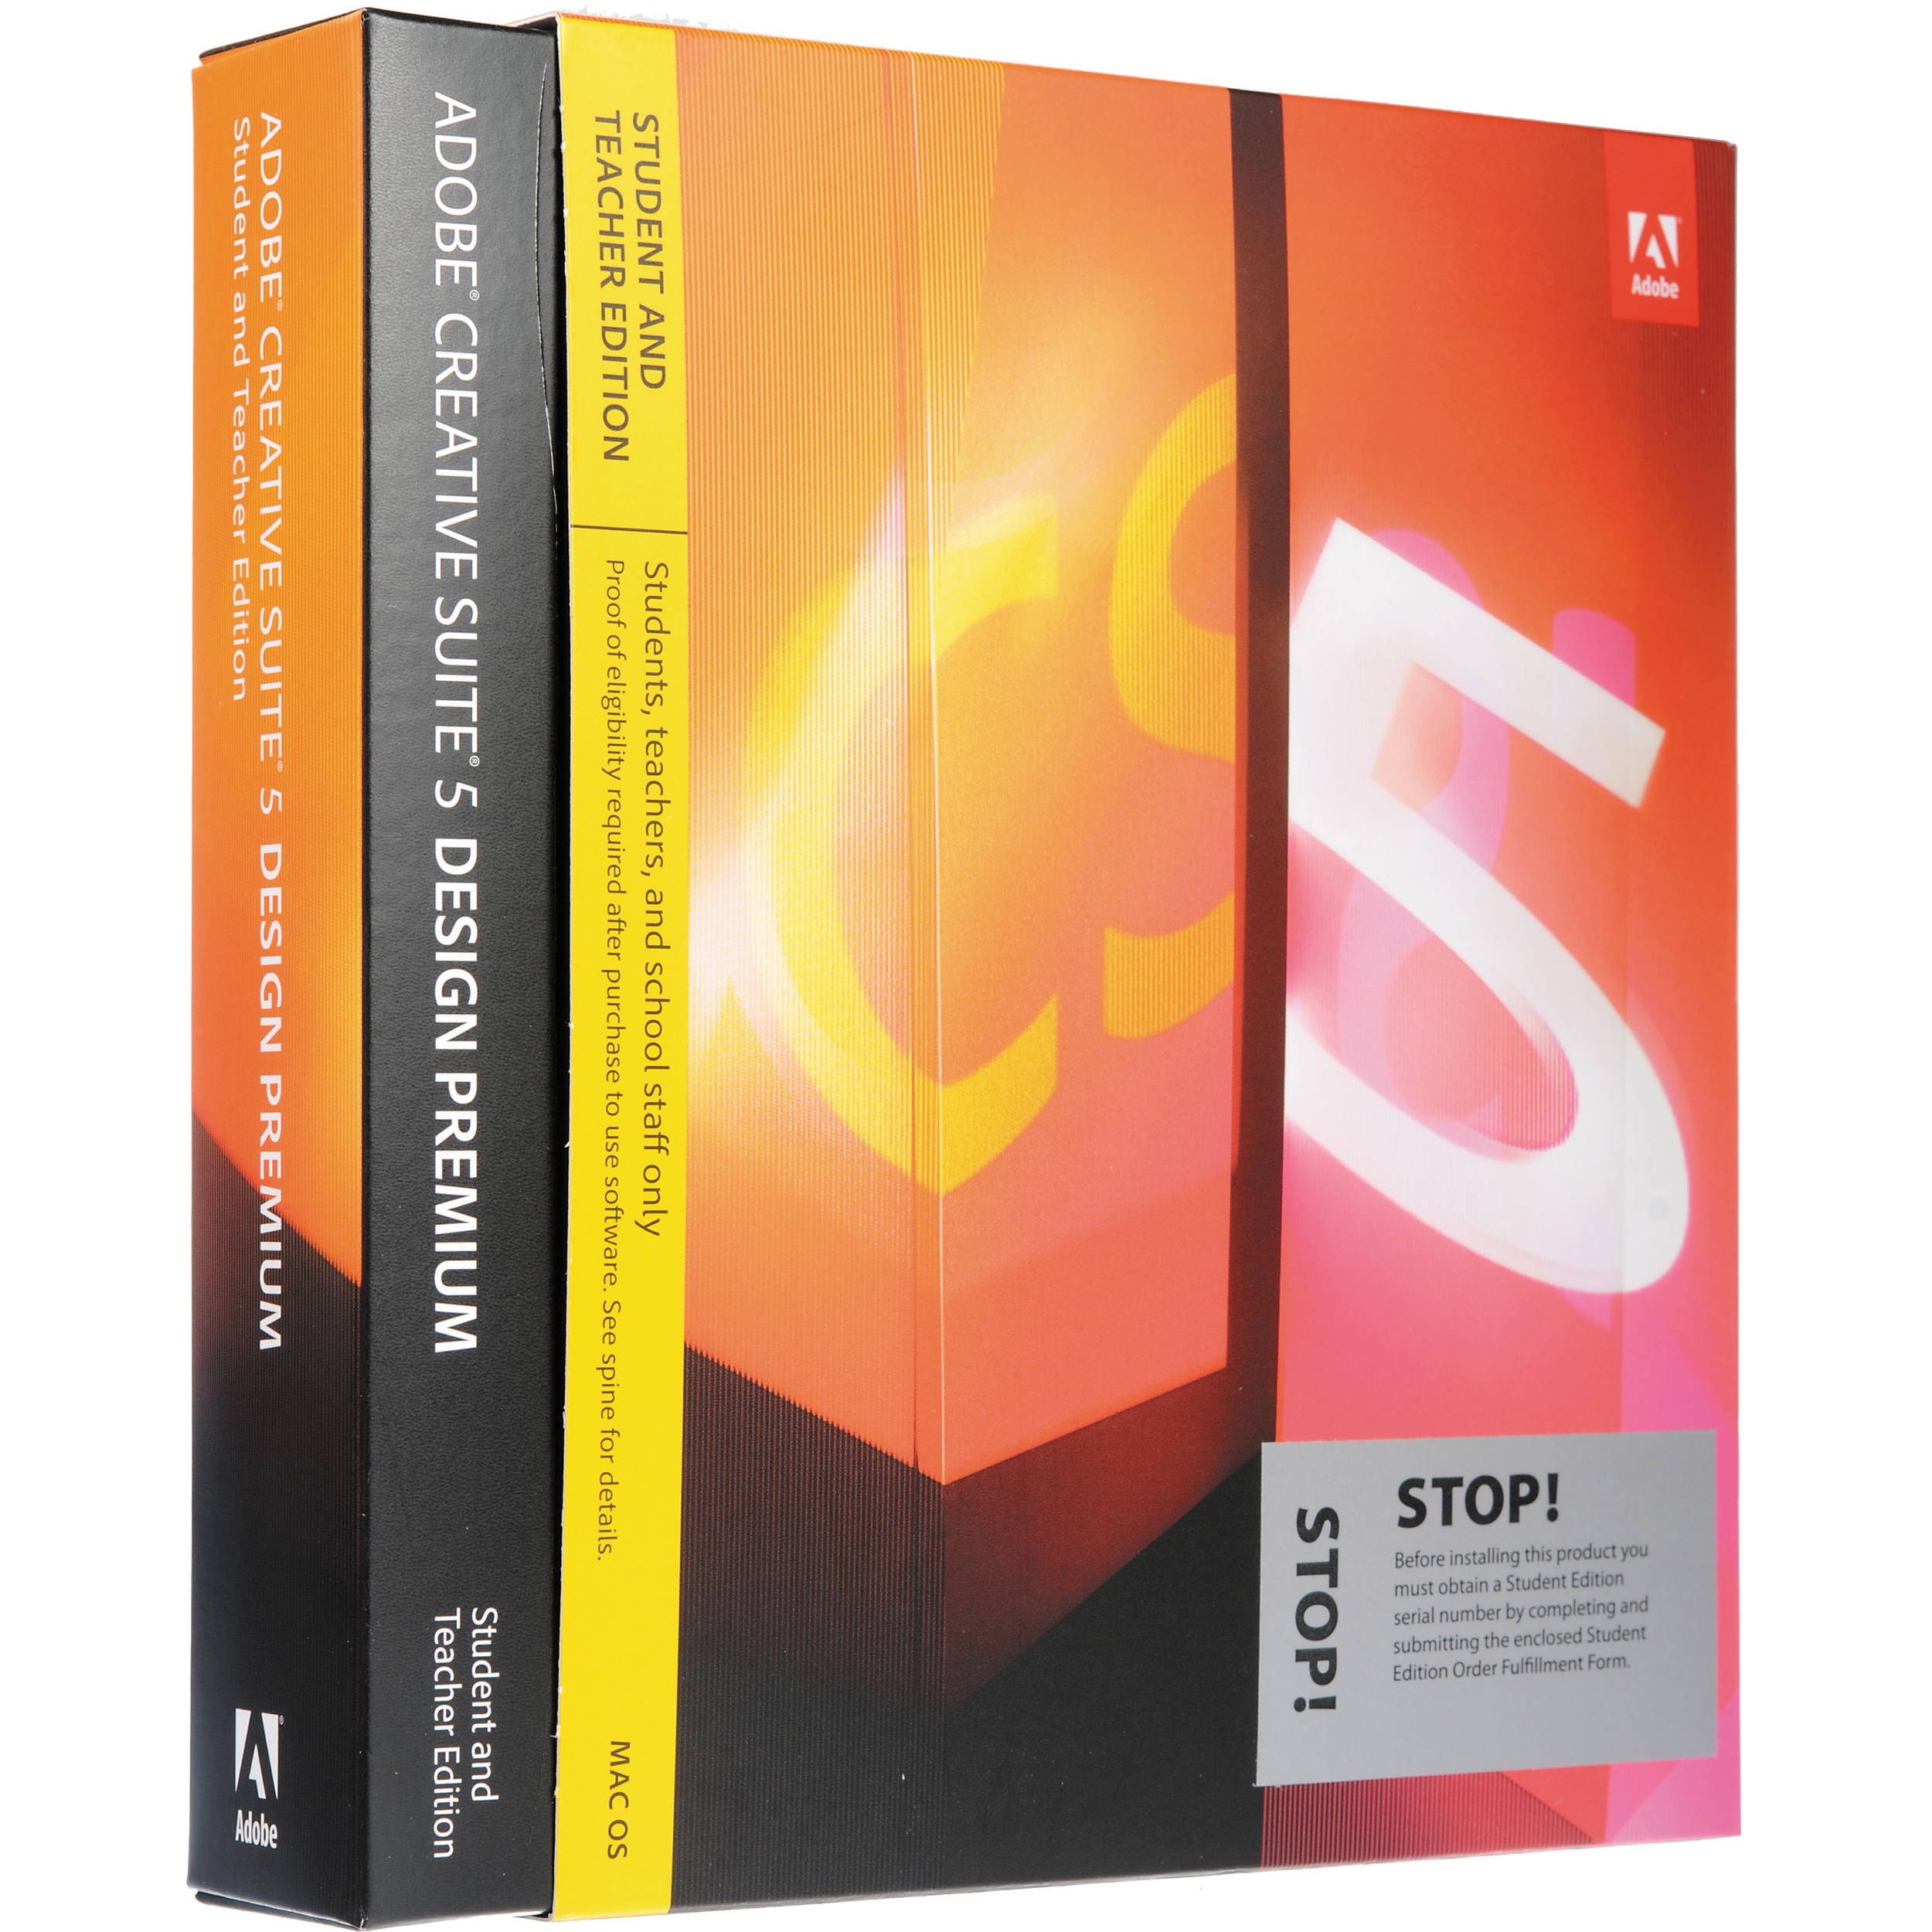 Adobe Dreamweaver CS5.5 Student And Teacher Edition mac